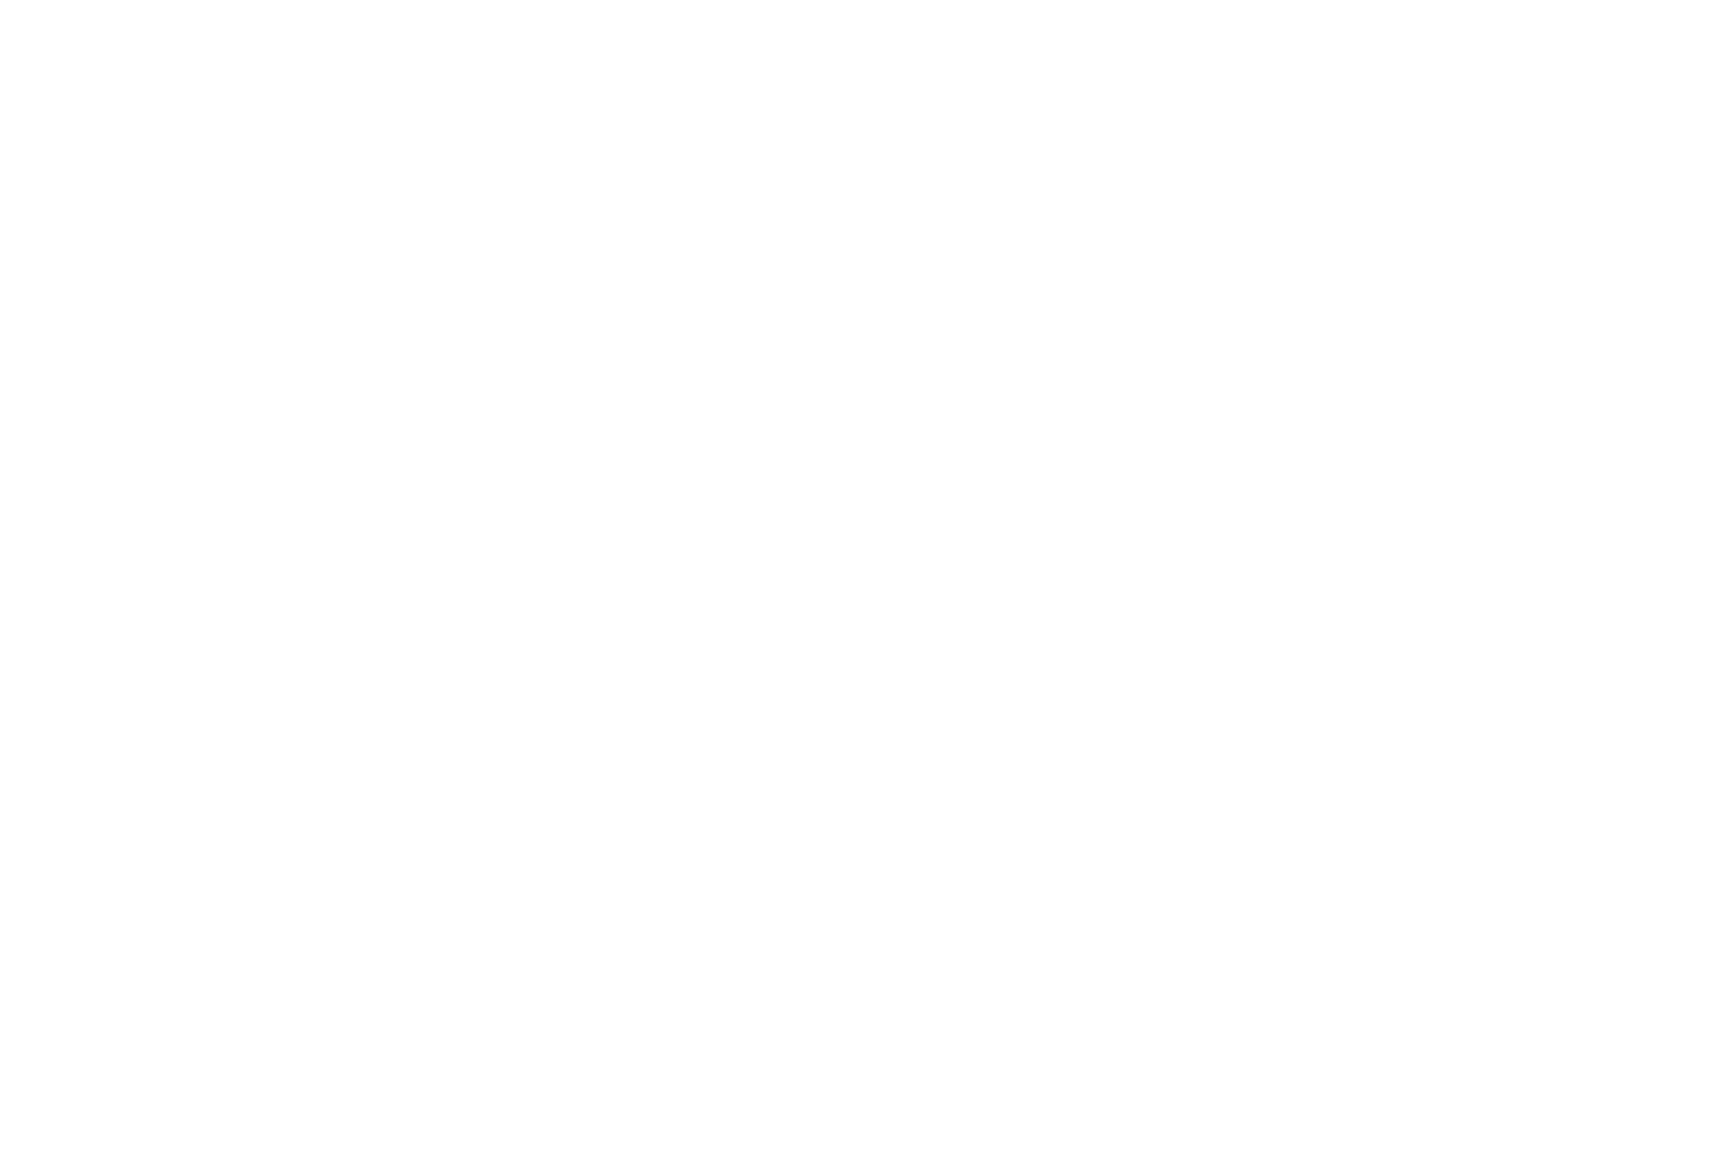 OFFICIAL SELECTION - FESTIGIOUS INTERNATIONAL FILM FESTIVAL  - 2016 (1).png